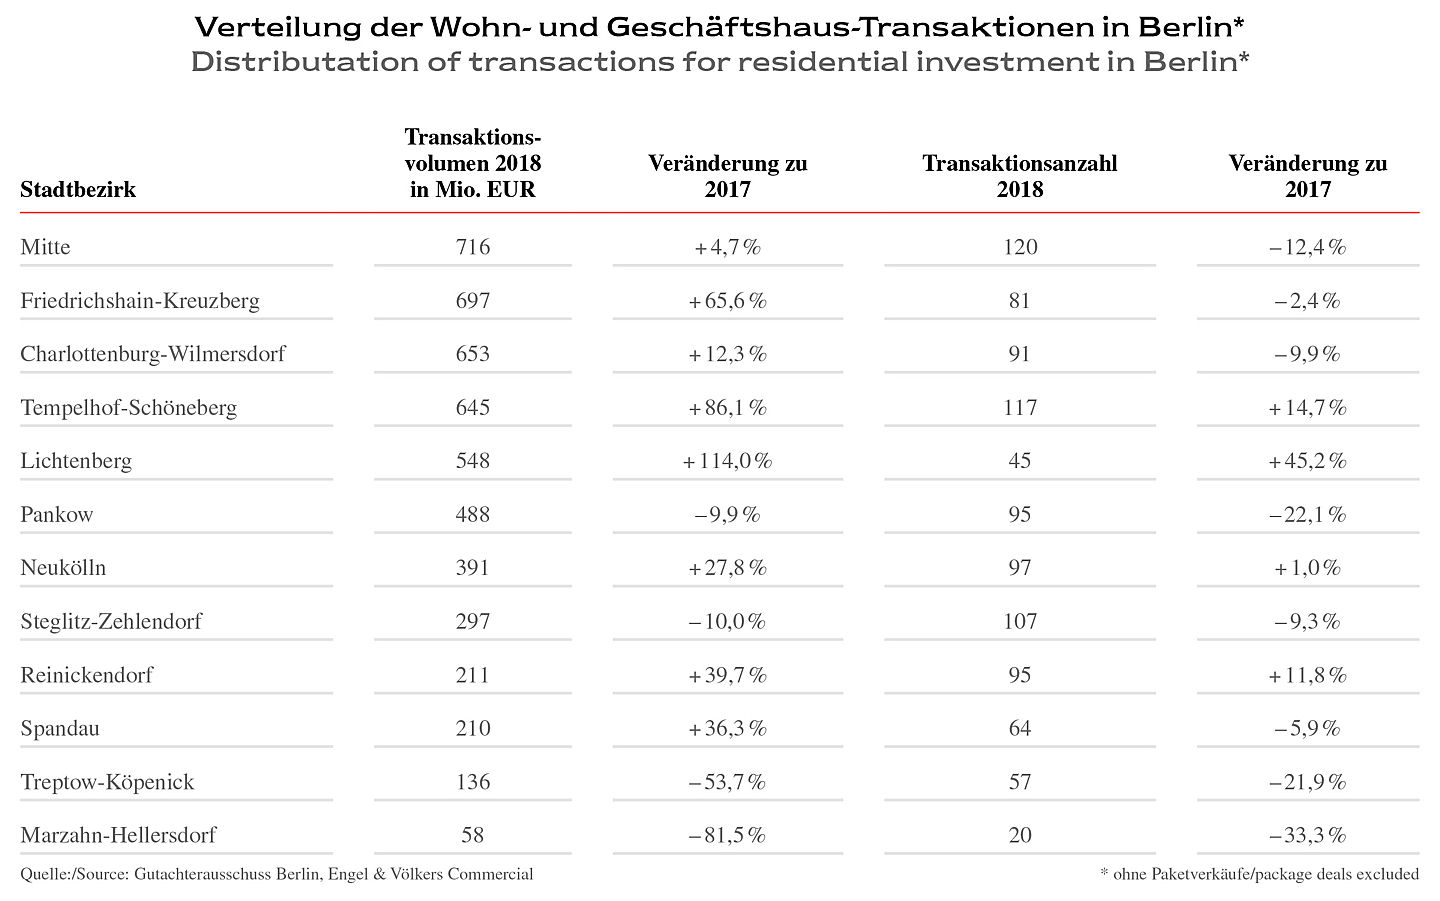  Berlin
- Verteilung der Transaktionen in Berlin – Marktreport Wohn- & Geschäftshäuser 2019/2020 – Engel & Völkers Commercial Berlin